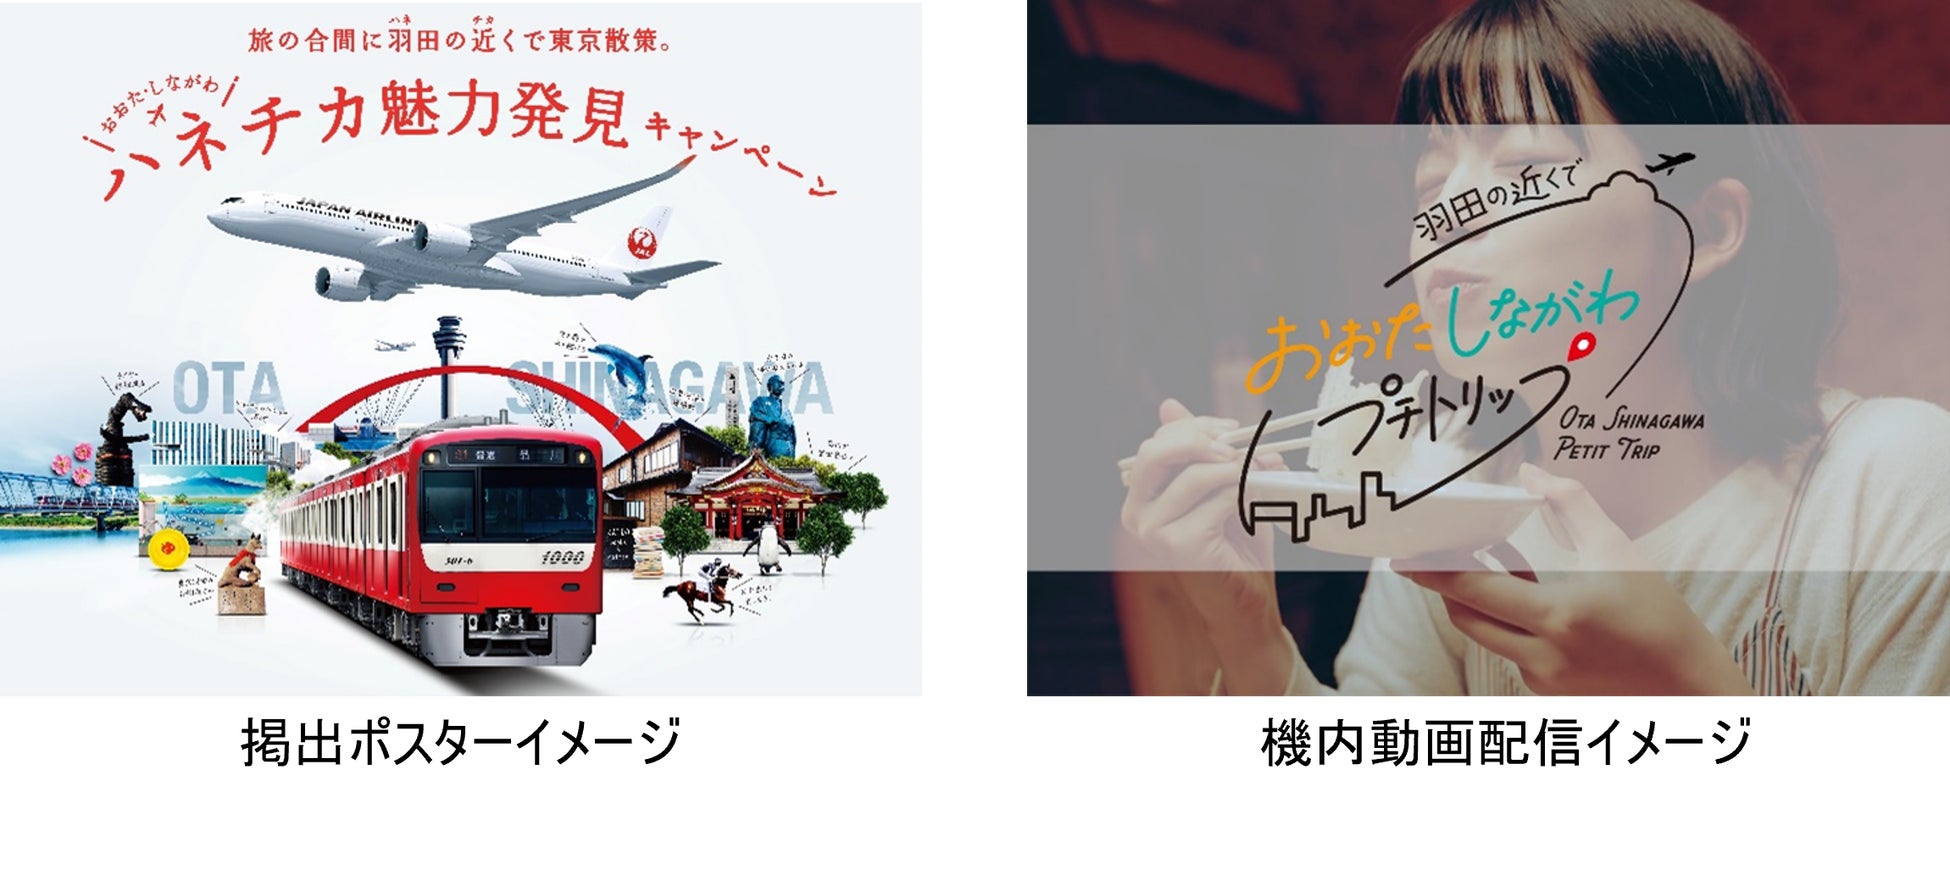 JALと京急電鉄「おおた・しながわ ハネチカ魅力発見キャンペーン」を開催